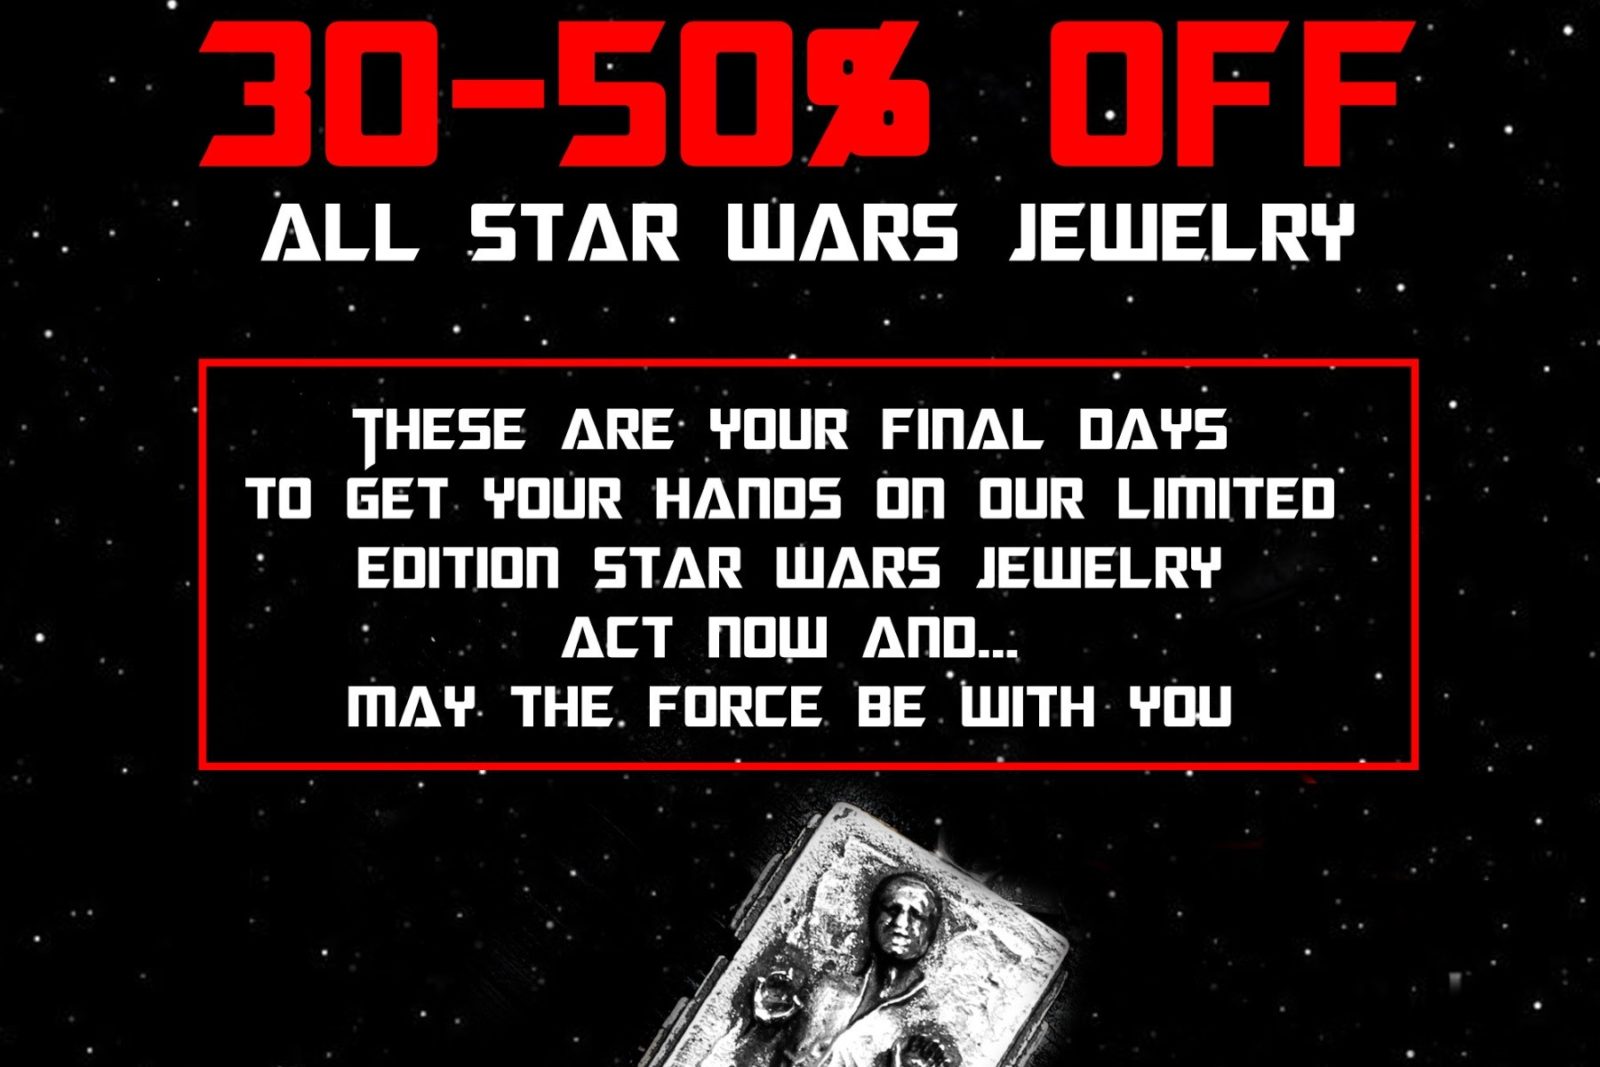 Final sale on Han Cholo x Star Wars jewelry